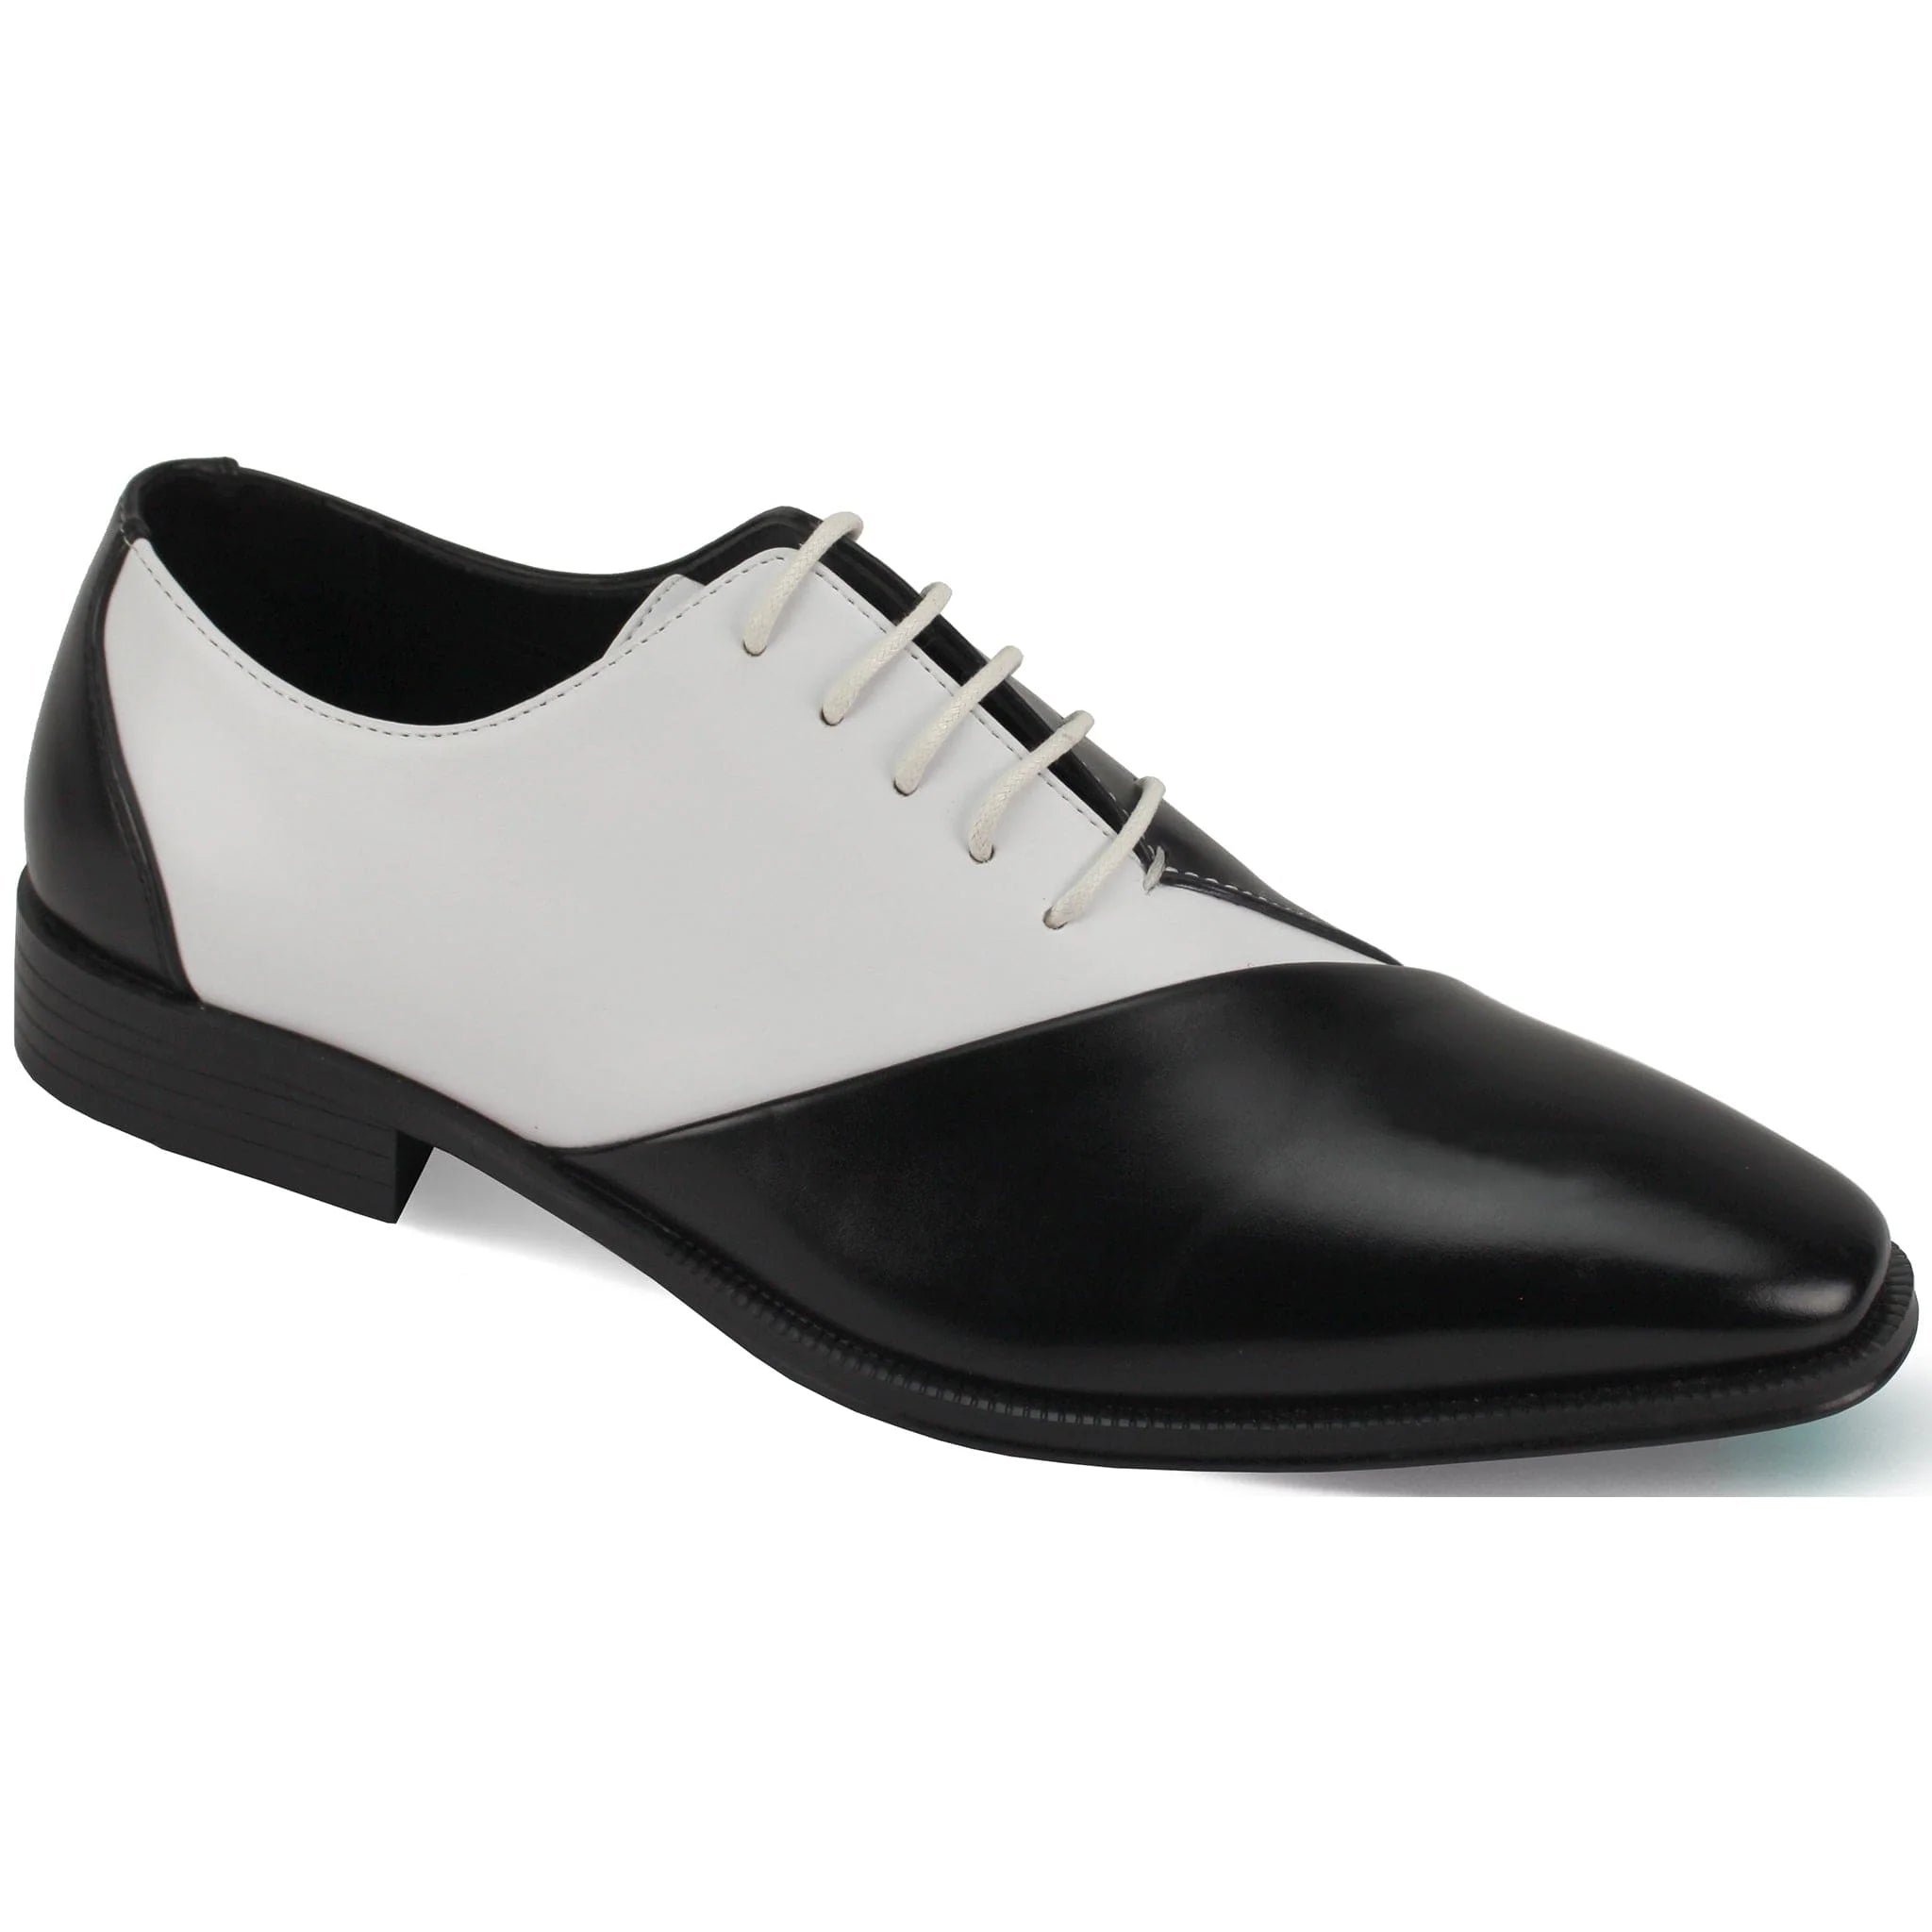 Antonio Cerrelli Dress Shoes Two-Tone Plain Toe Oxford